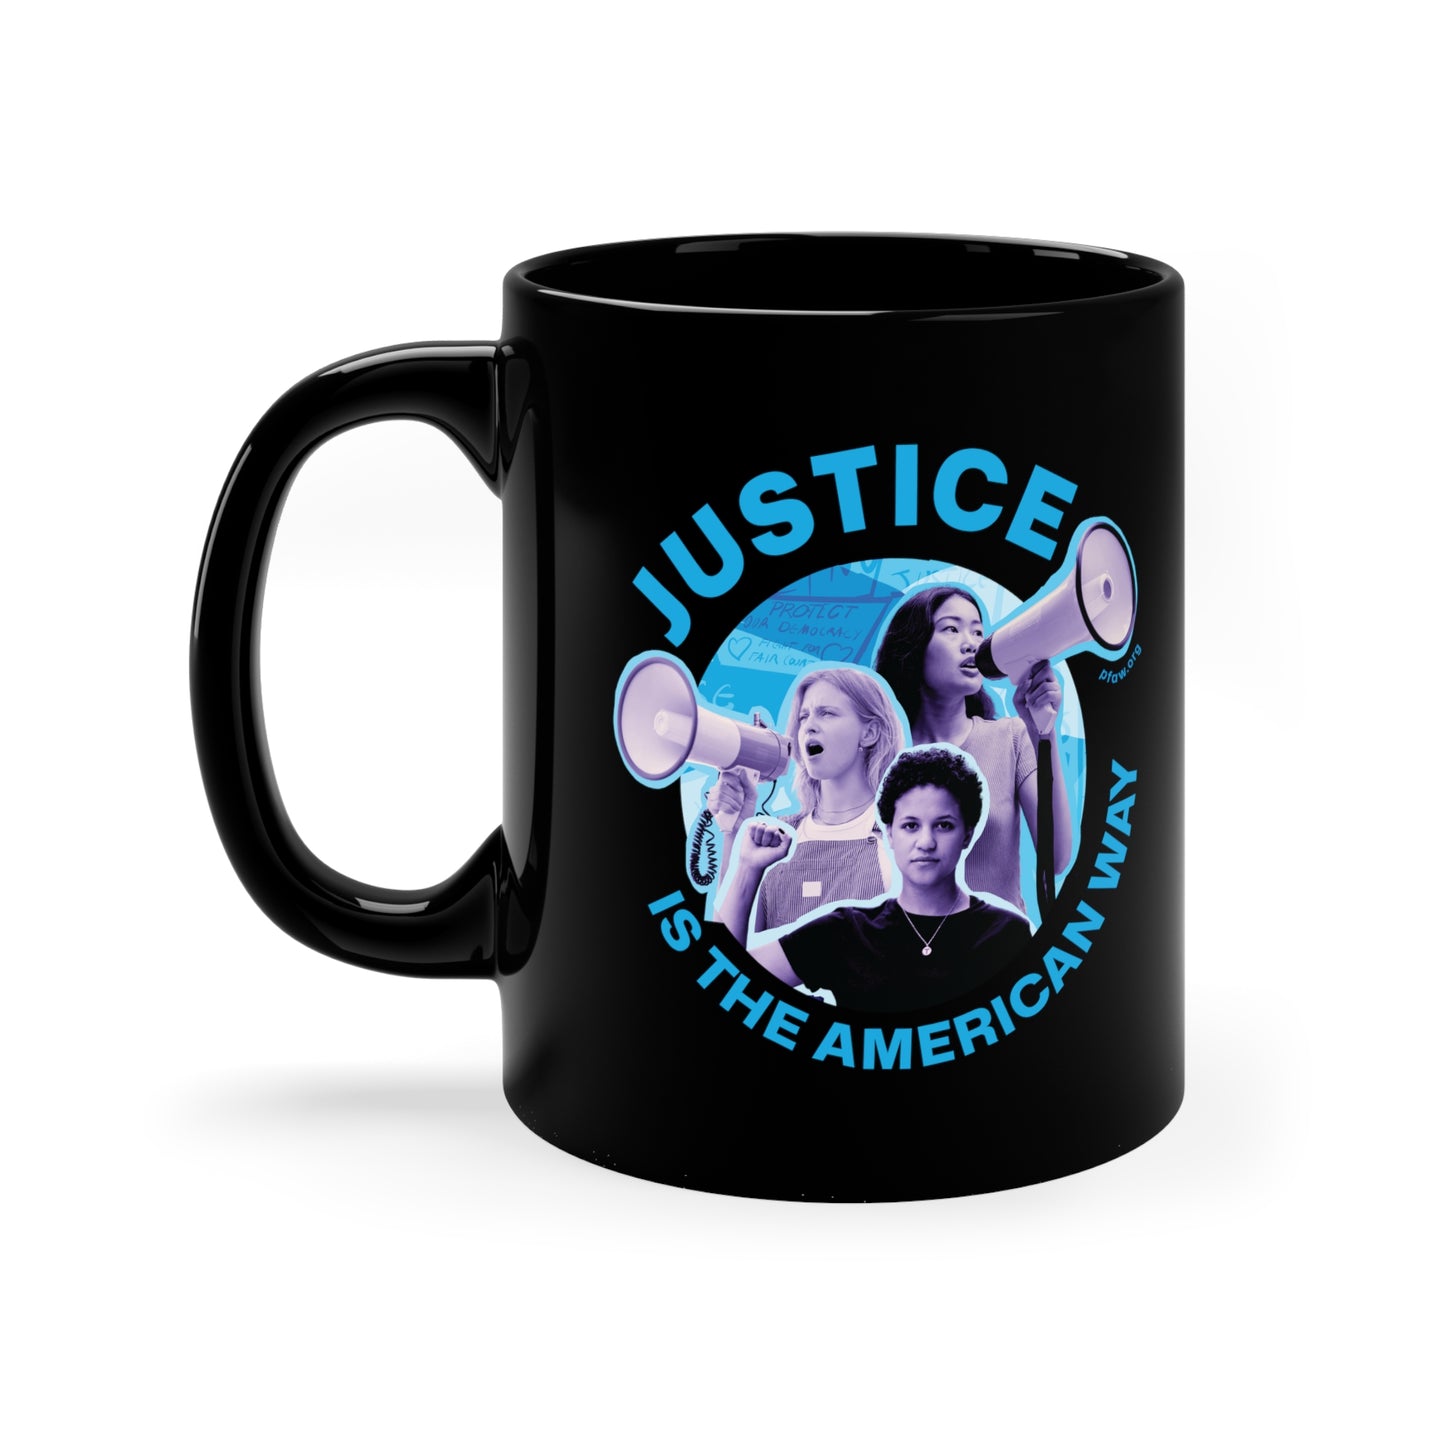 Justice is the American Way Mug